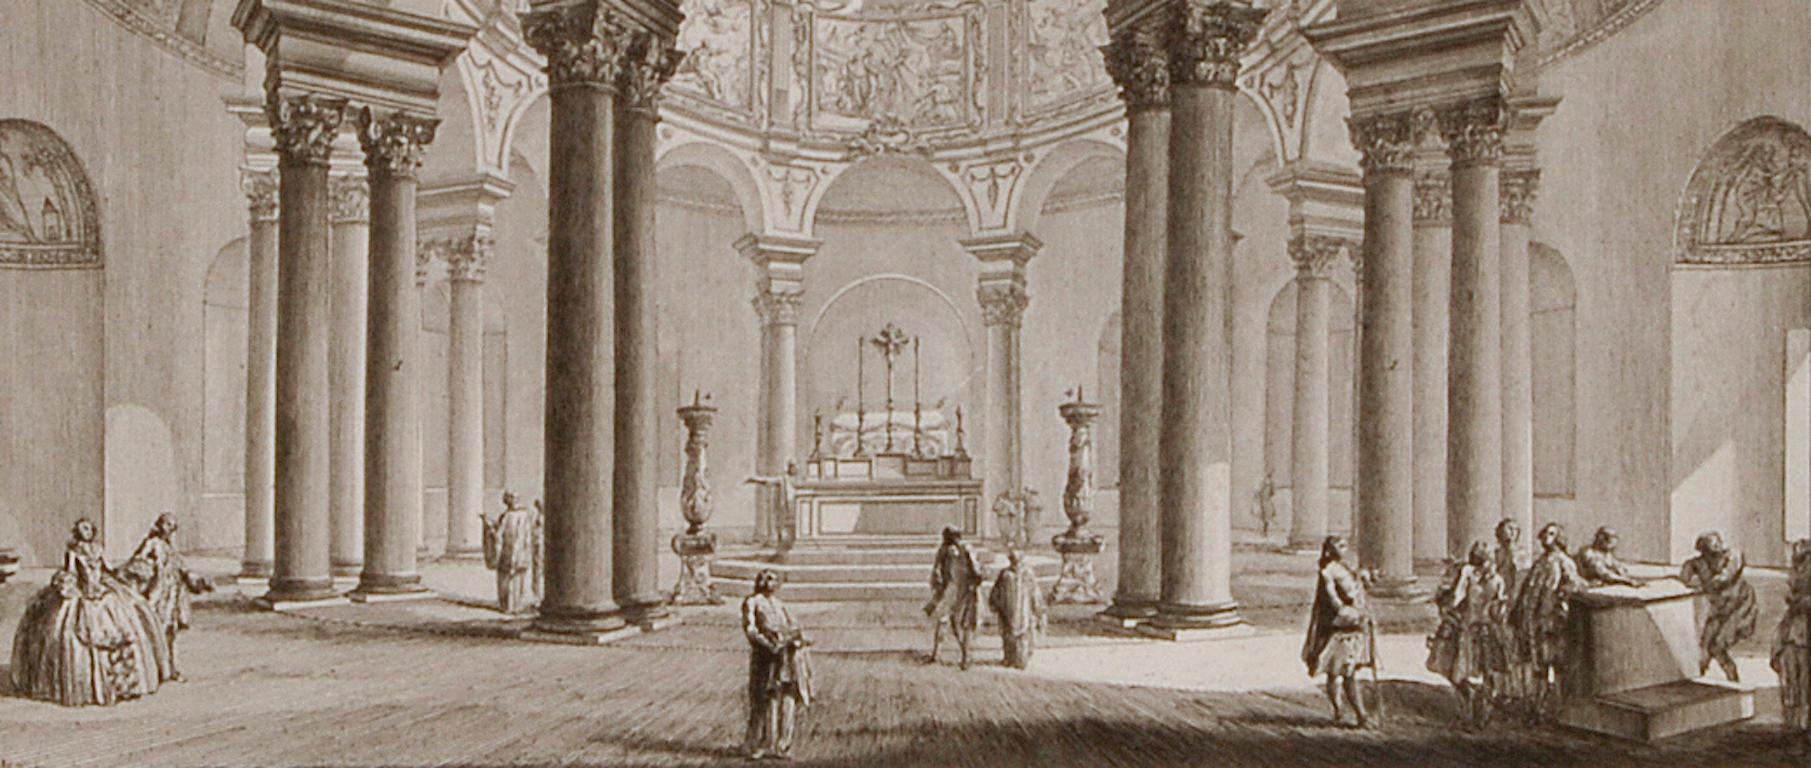 Church of St. Costanza, Rome: An 18th Century Piranesi Architectural Etching  - Old Masters Print by Giovanni Battista Piranesi